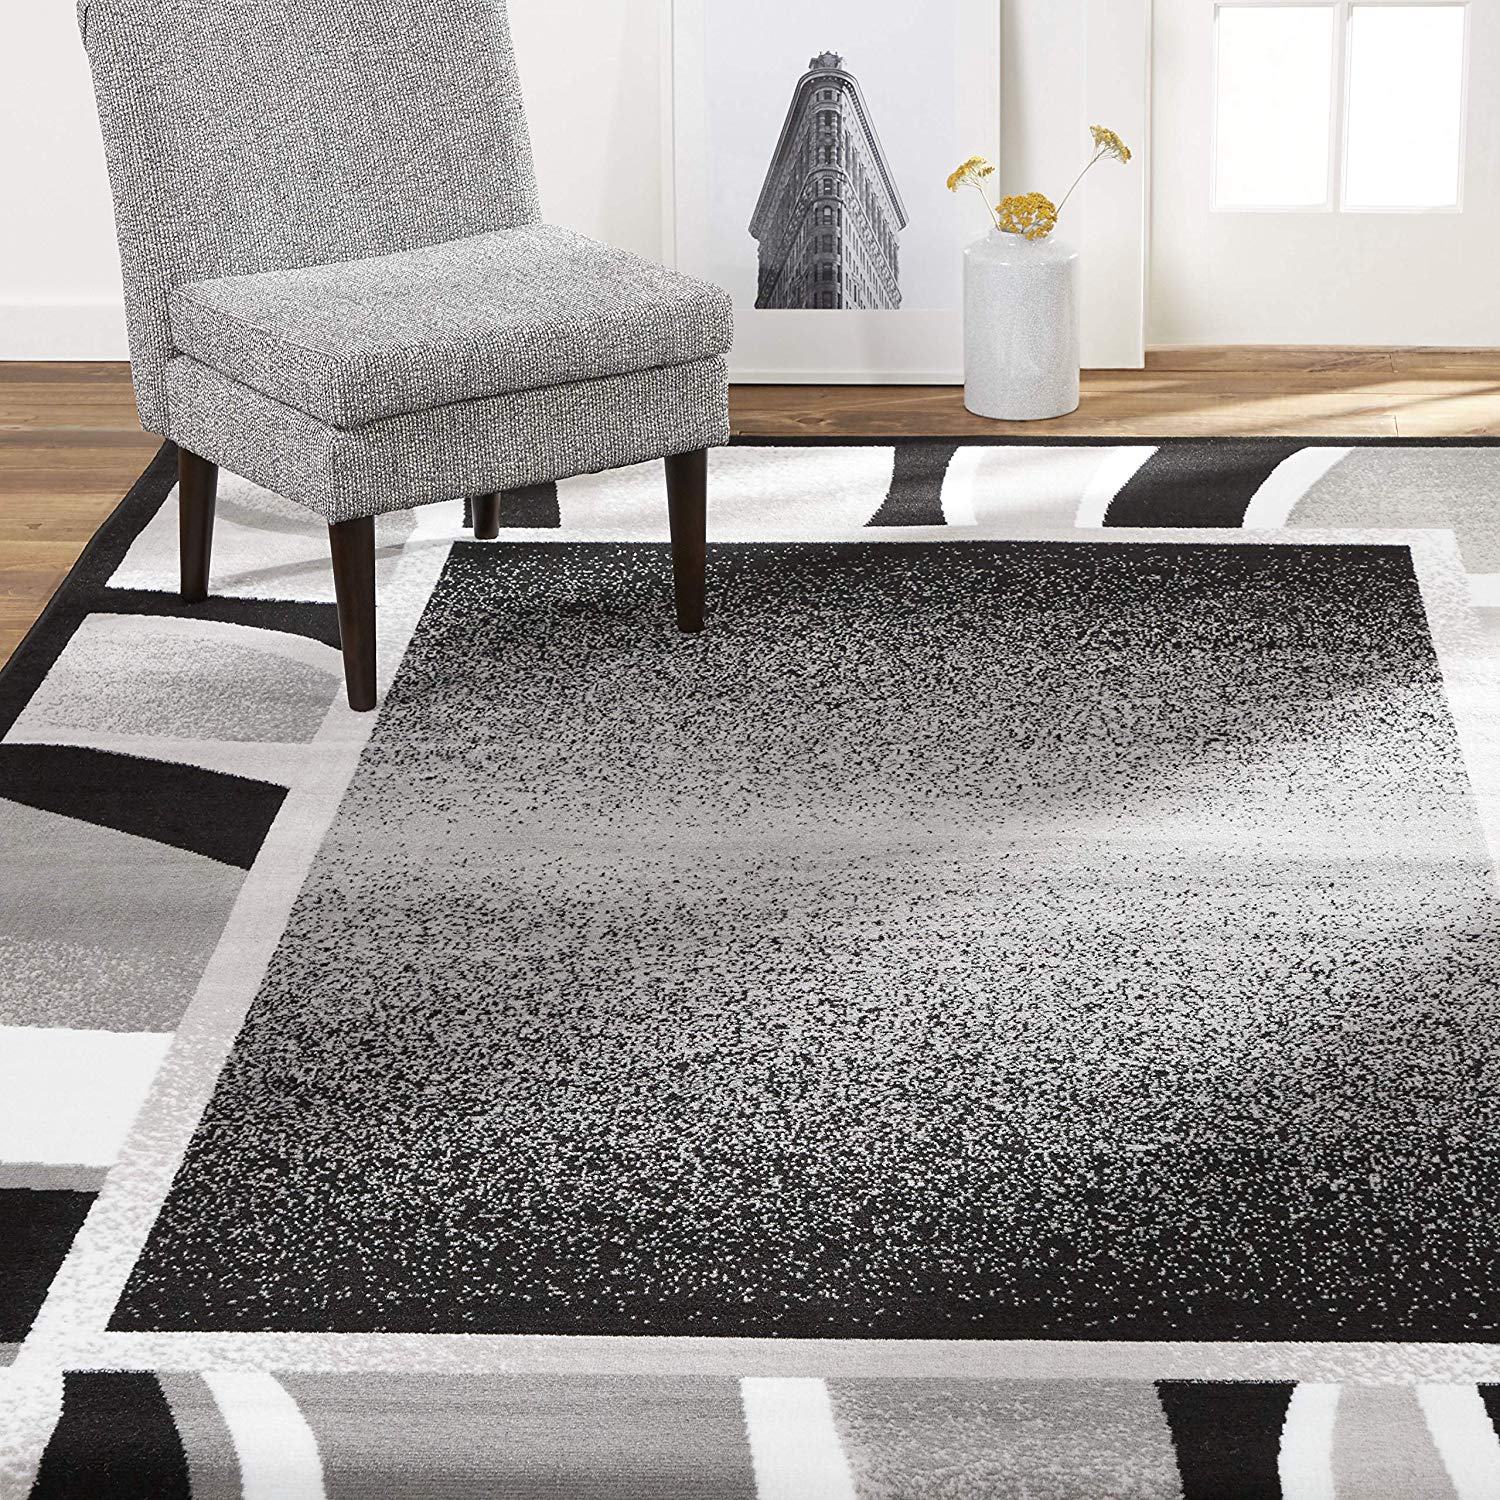 Area Rugs Multi-Color Rugs Area Rugs Carpet Flooring Modern Contemporary Geometric Carpet